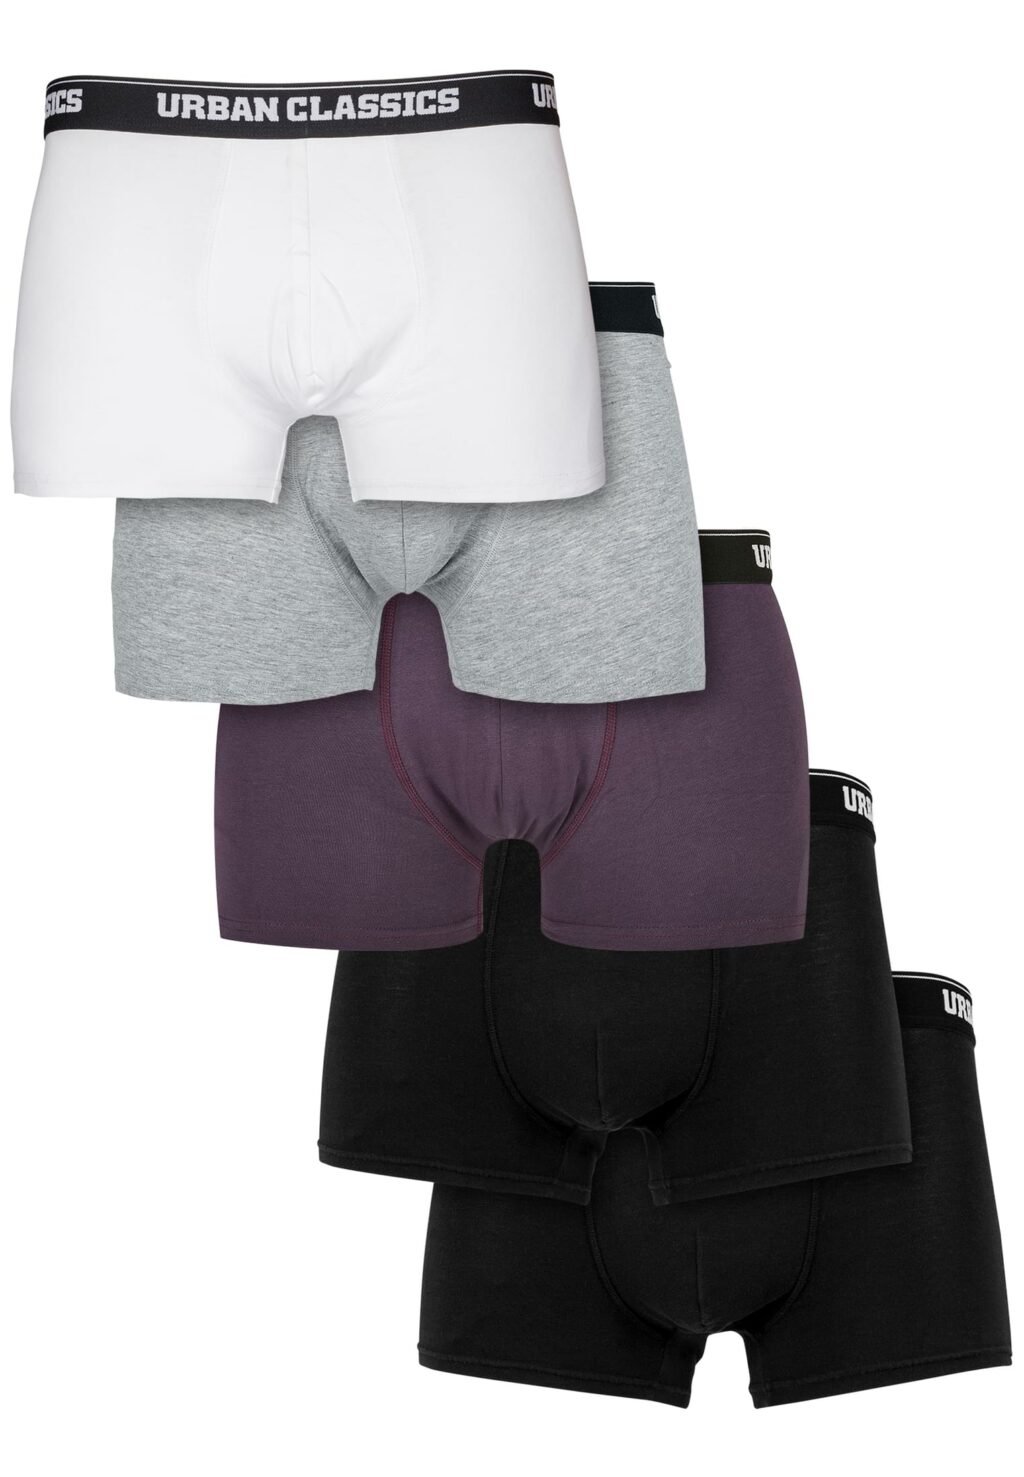 Urban Classics Organic Boxer Shorts 5-Pack purplenight+grey+wht+blk+blk TB4417